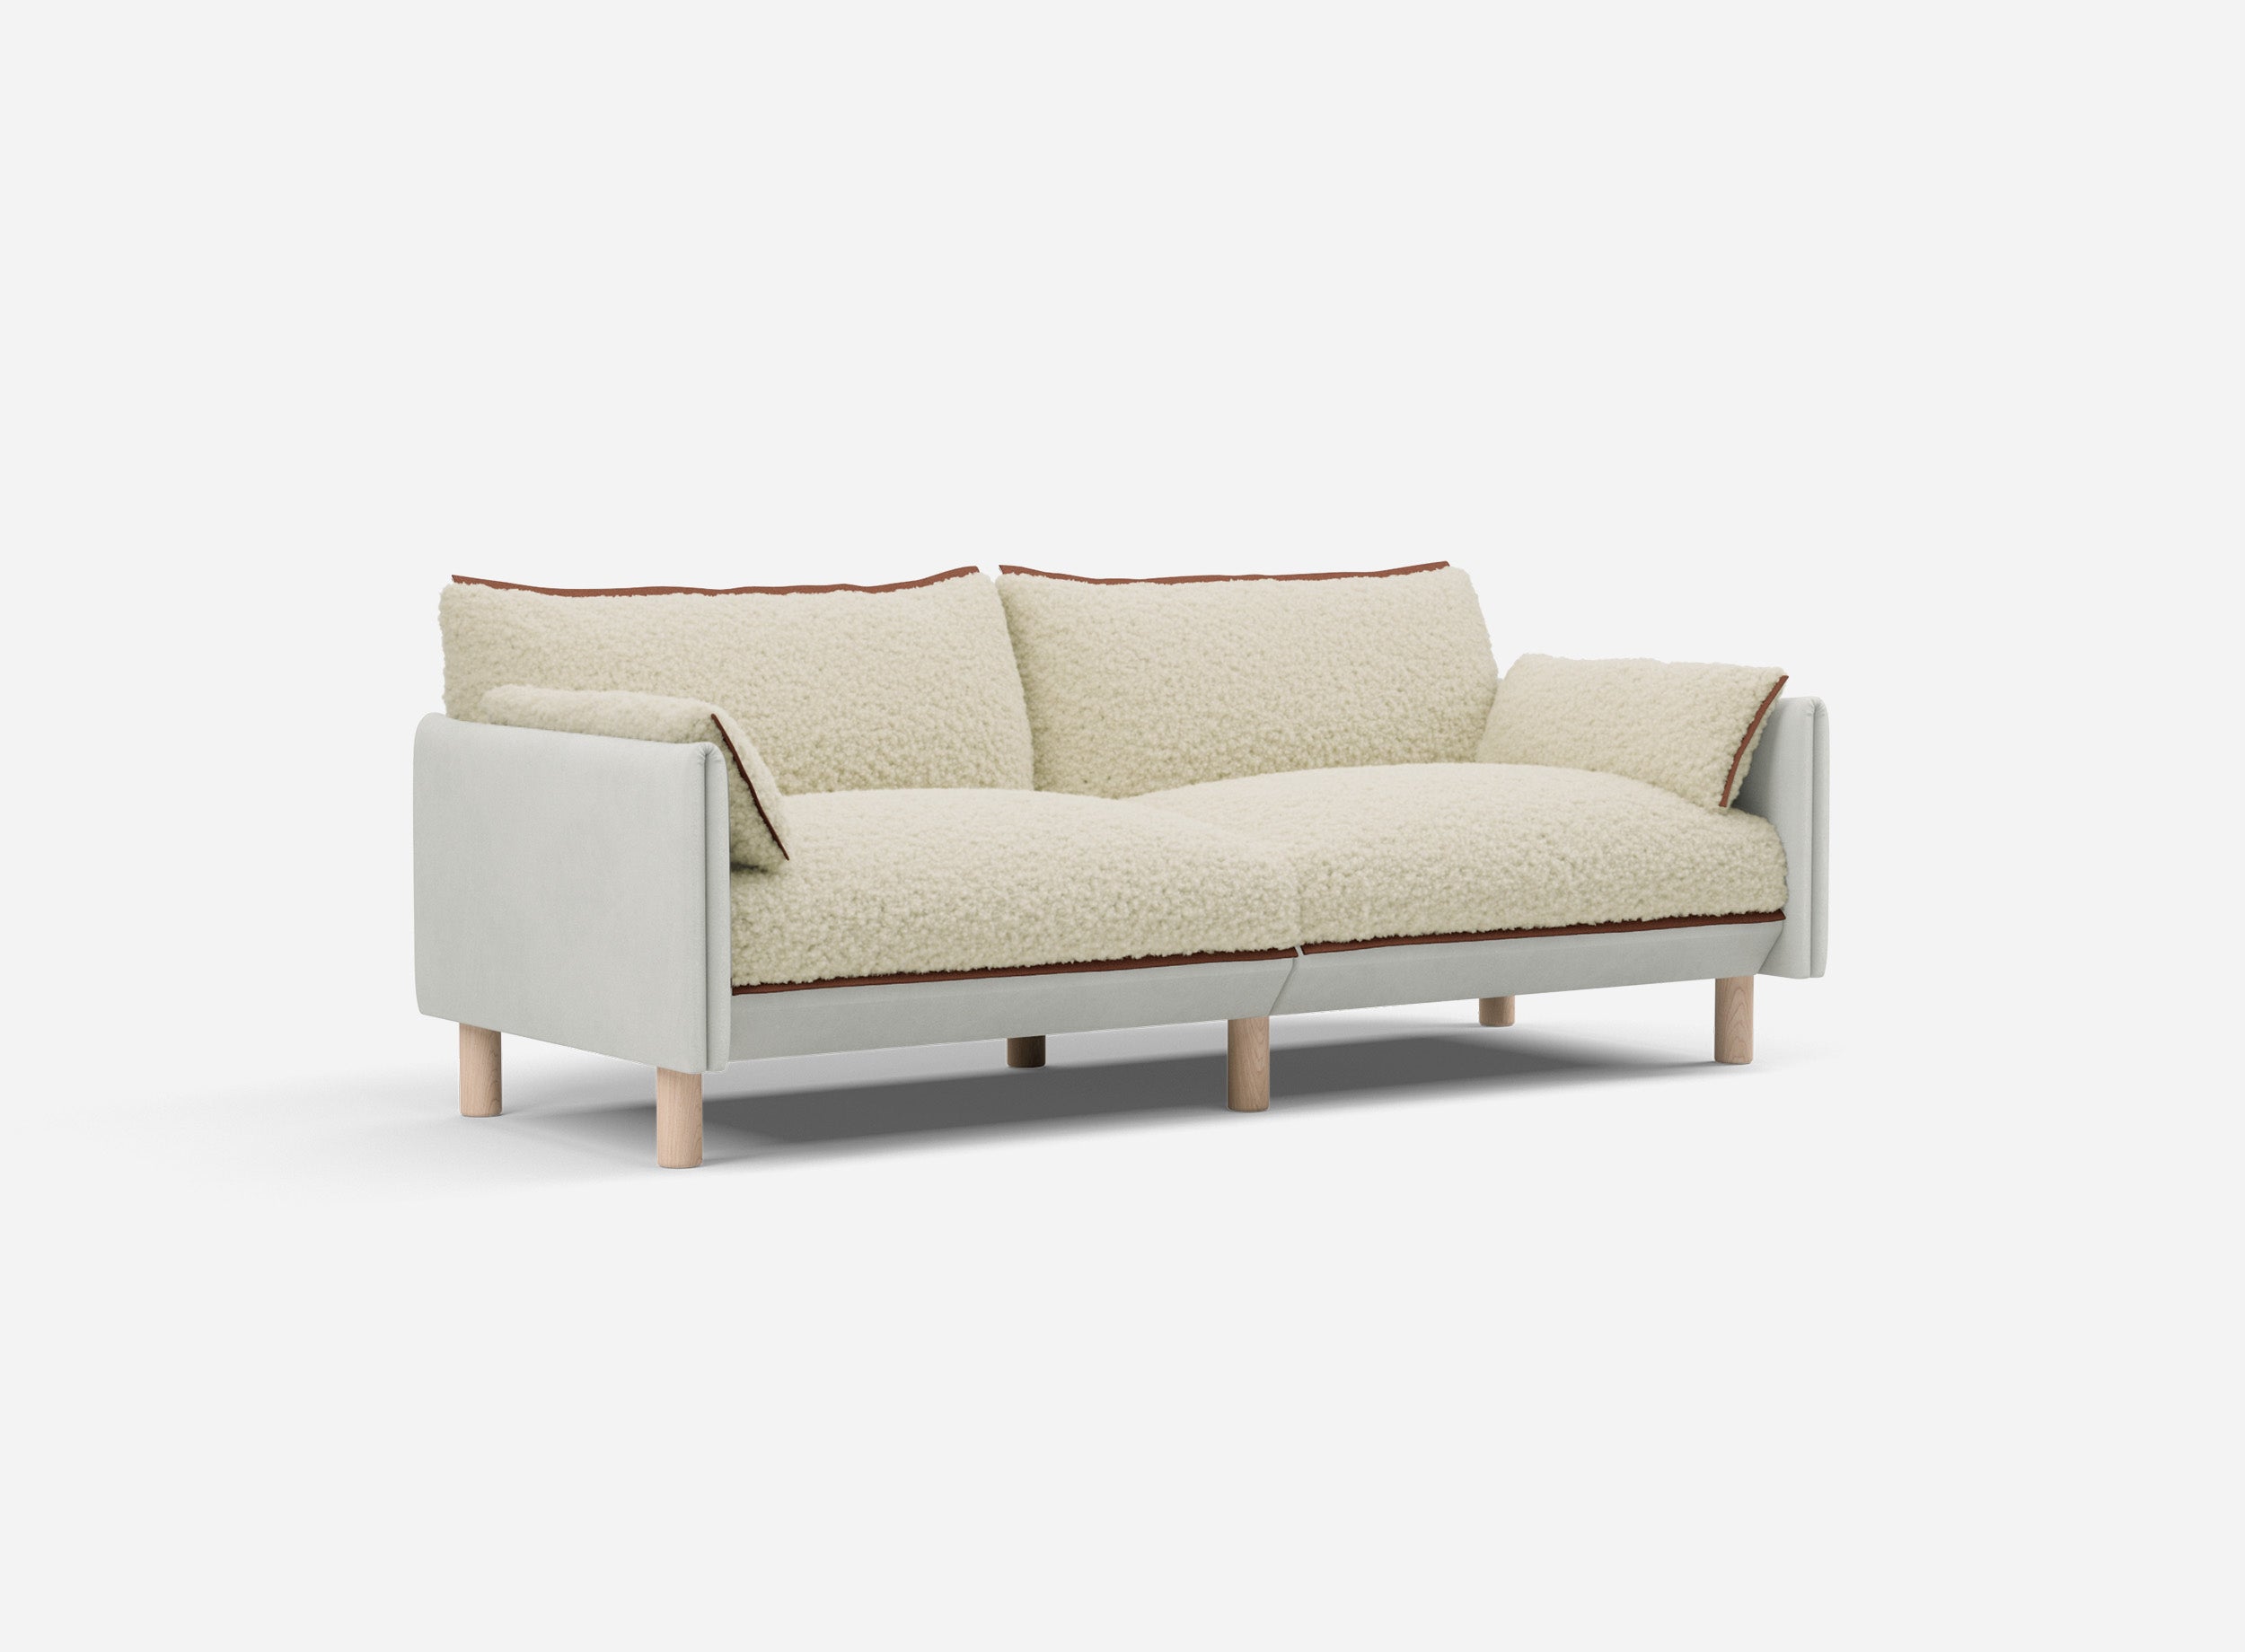 3 Seater Sofa | Cotton Natural - Cozmo @ Cream Fleece Jacket | Brick Trim